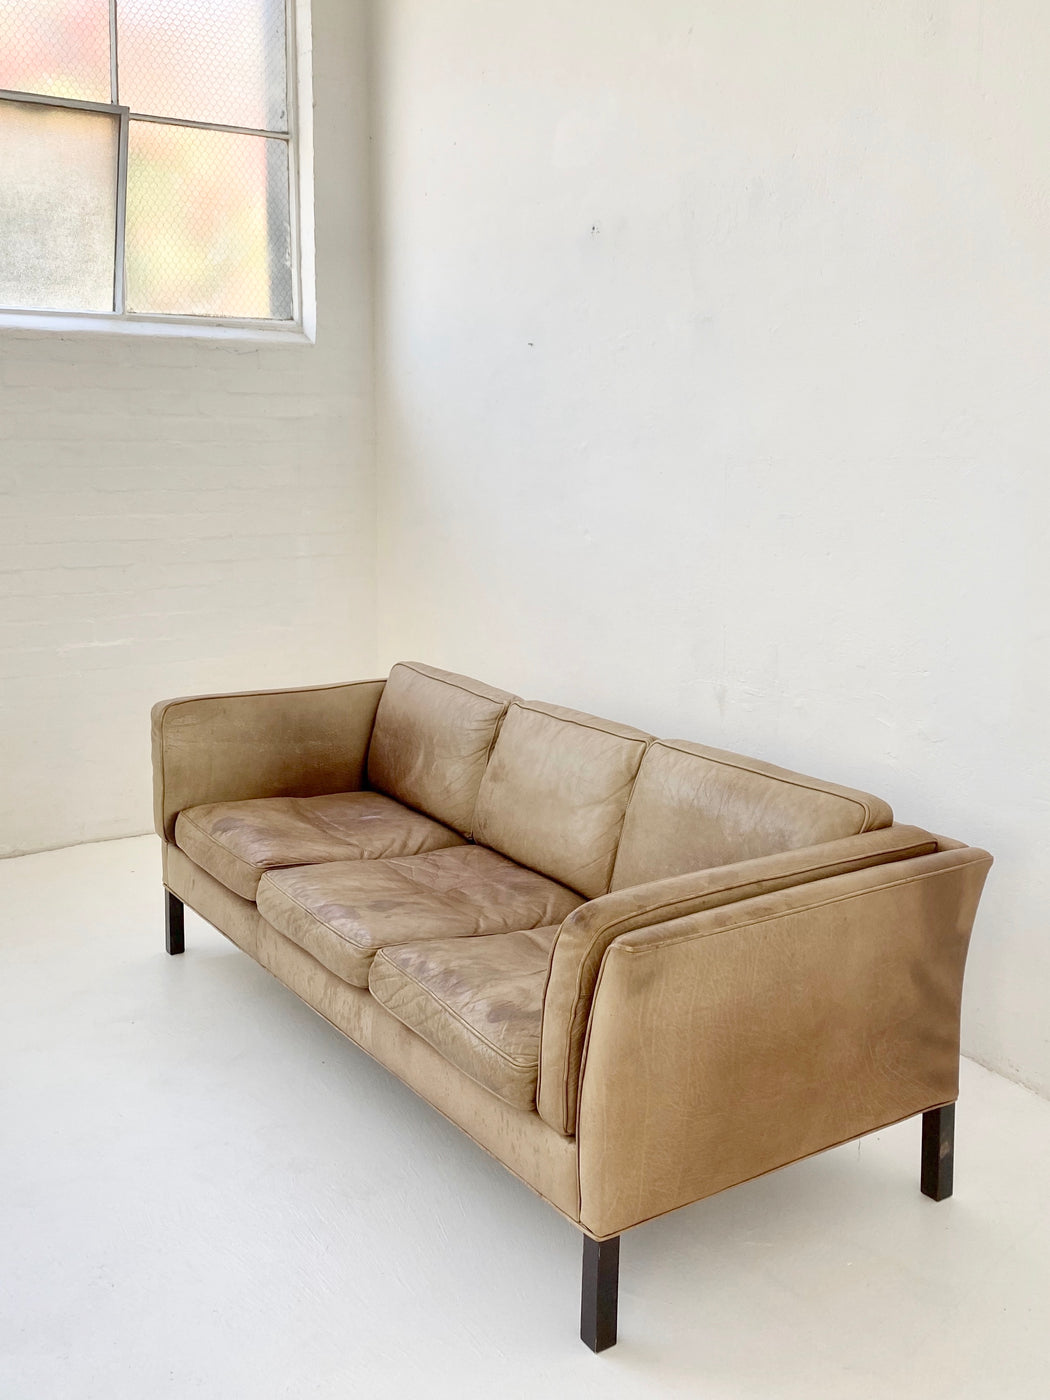 Stouby 'Oslo' Leather Sofa